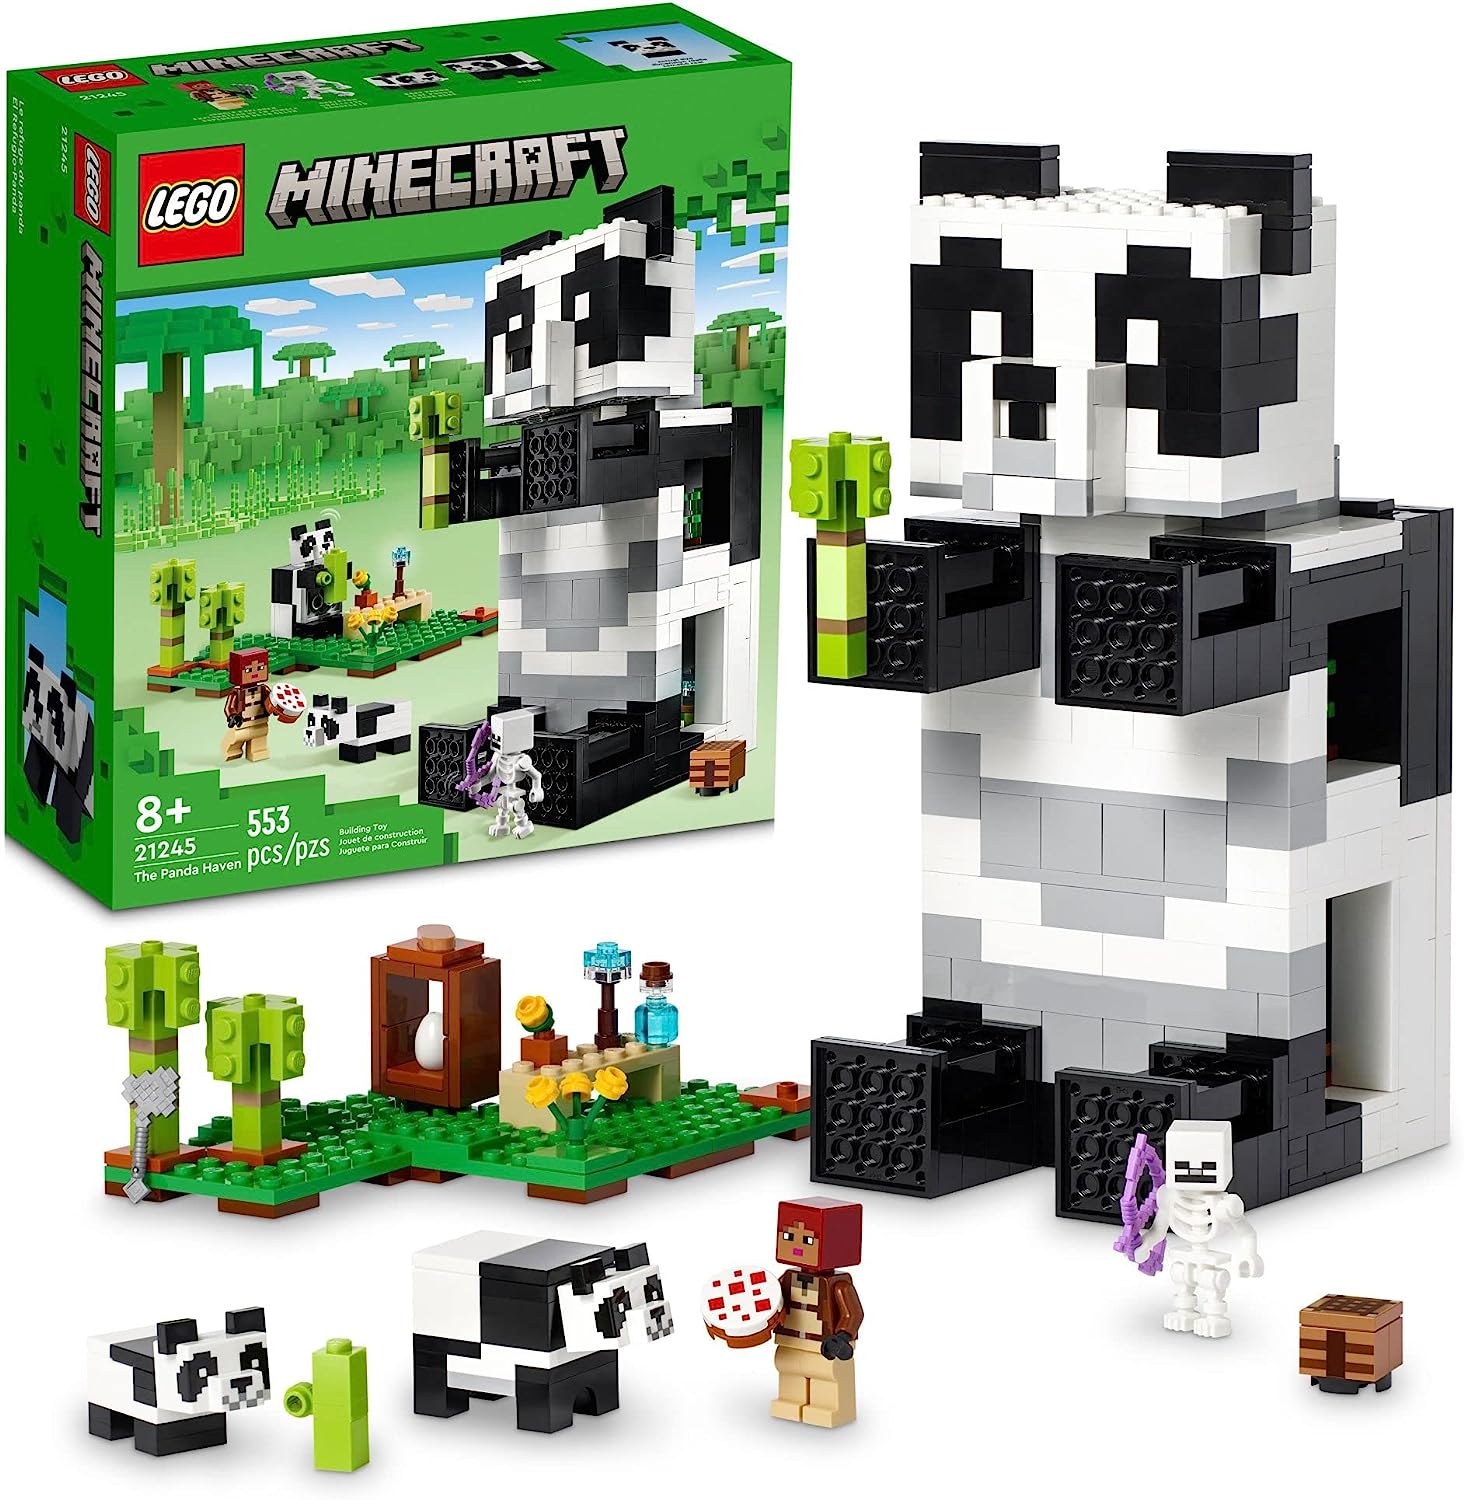 Lego Minecraft 21245 The Panda Haven Building Toy (553 pcs)